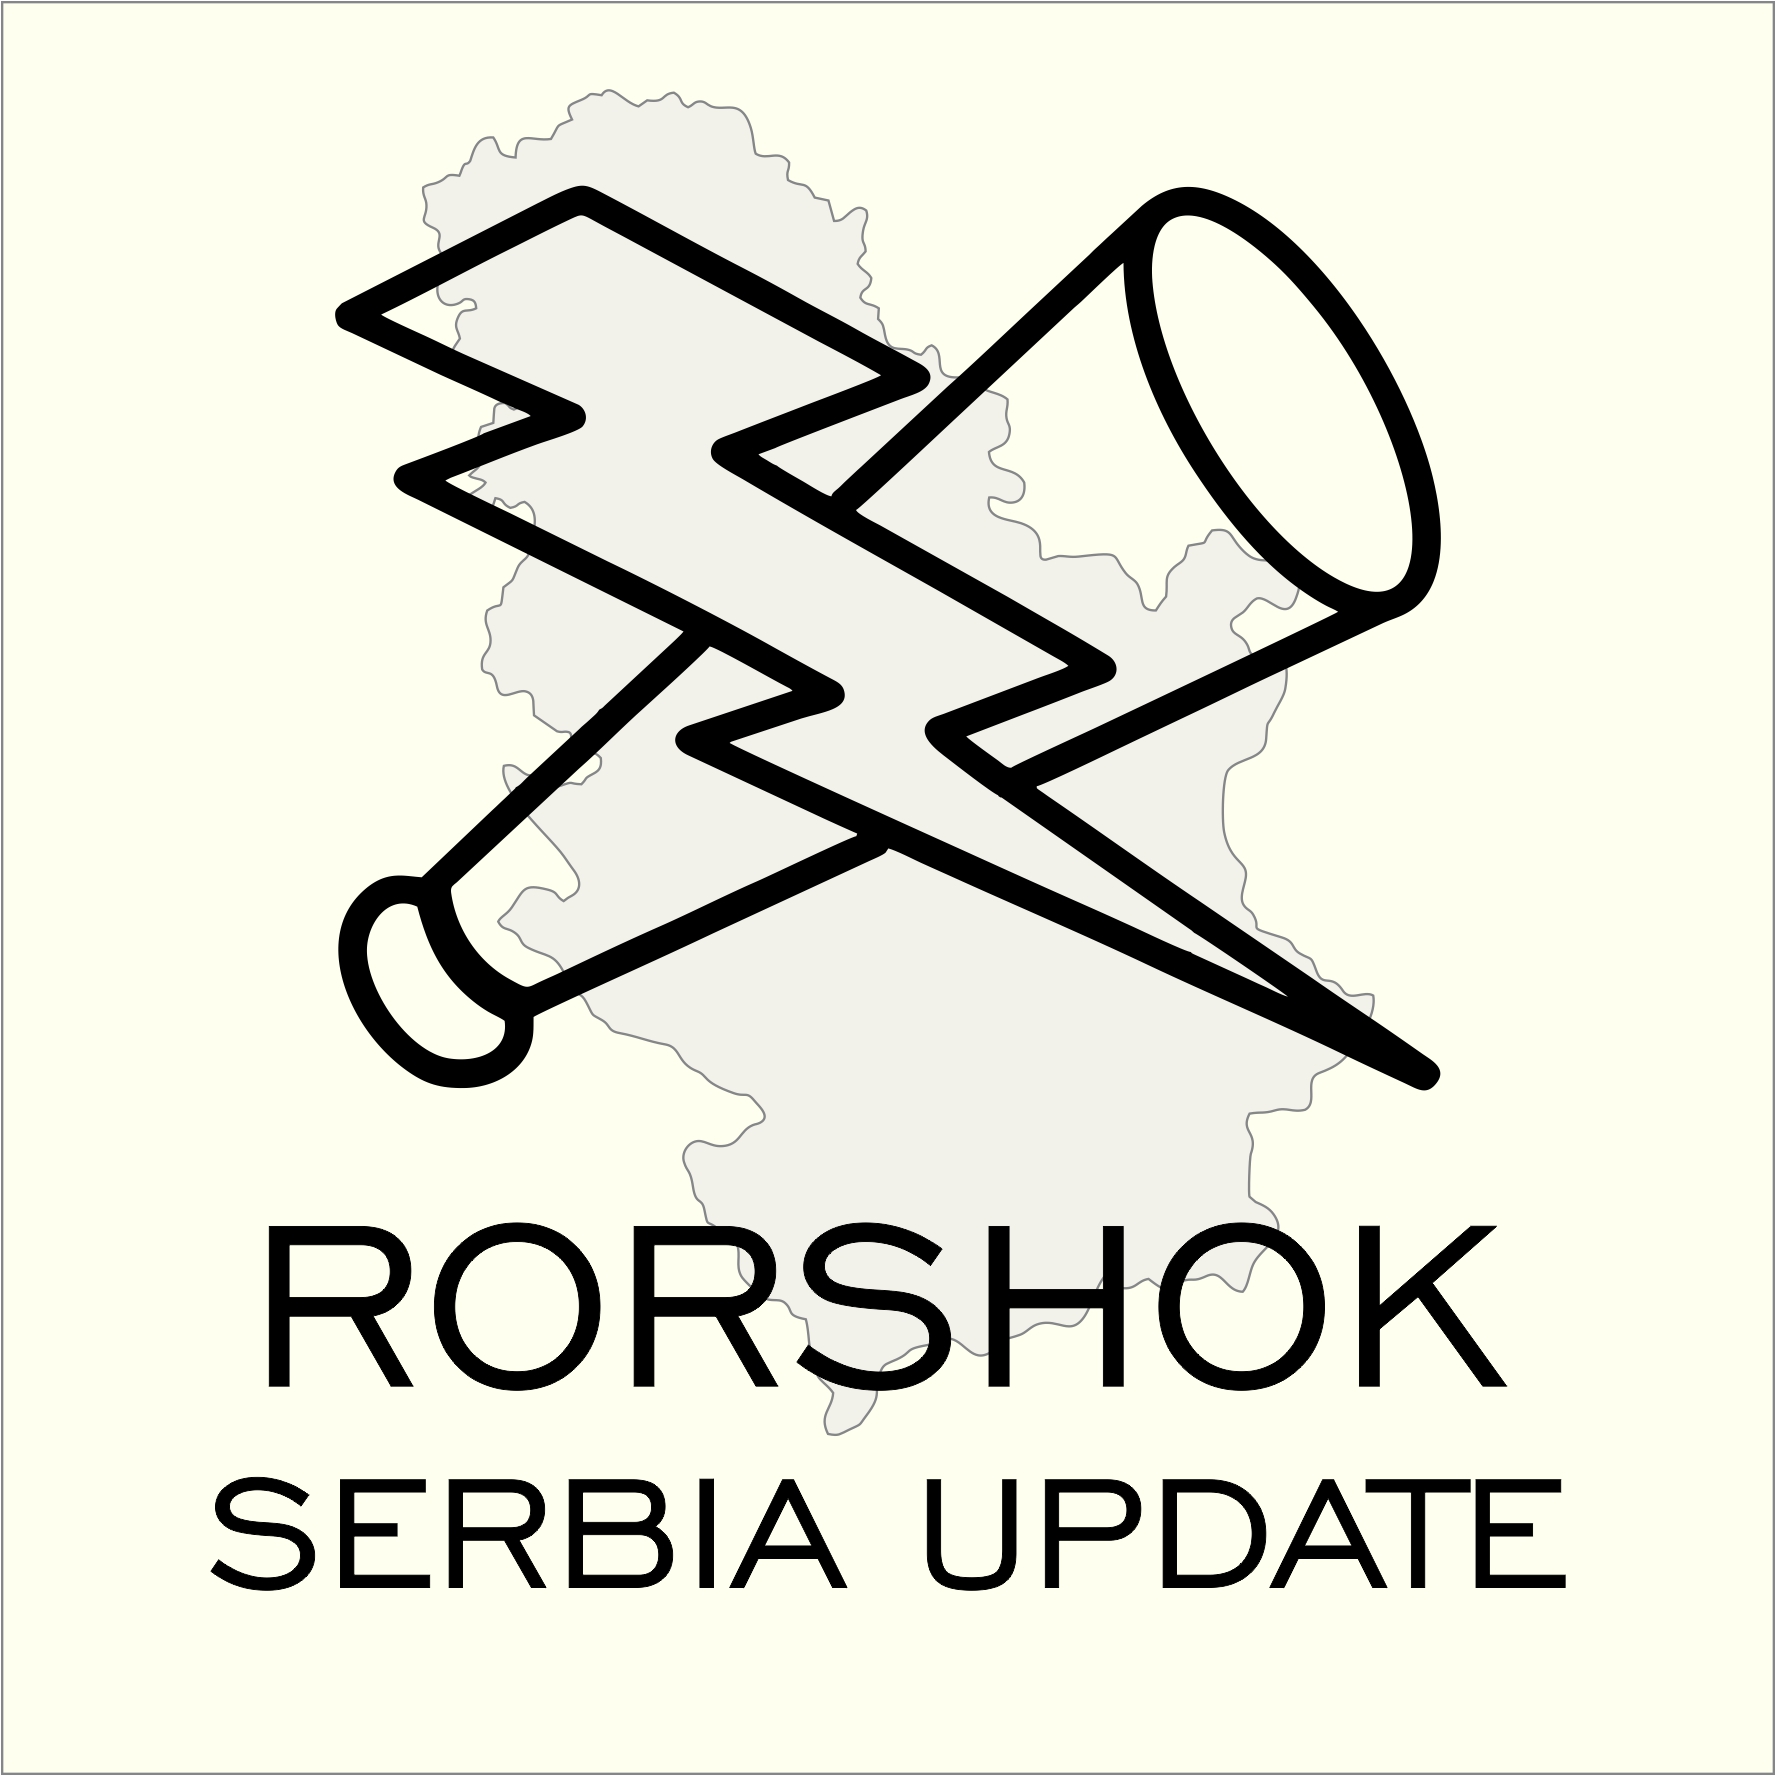 Artwork for podcast Rorshok Serbia Update